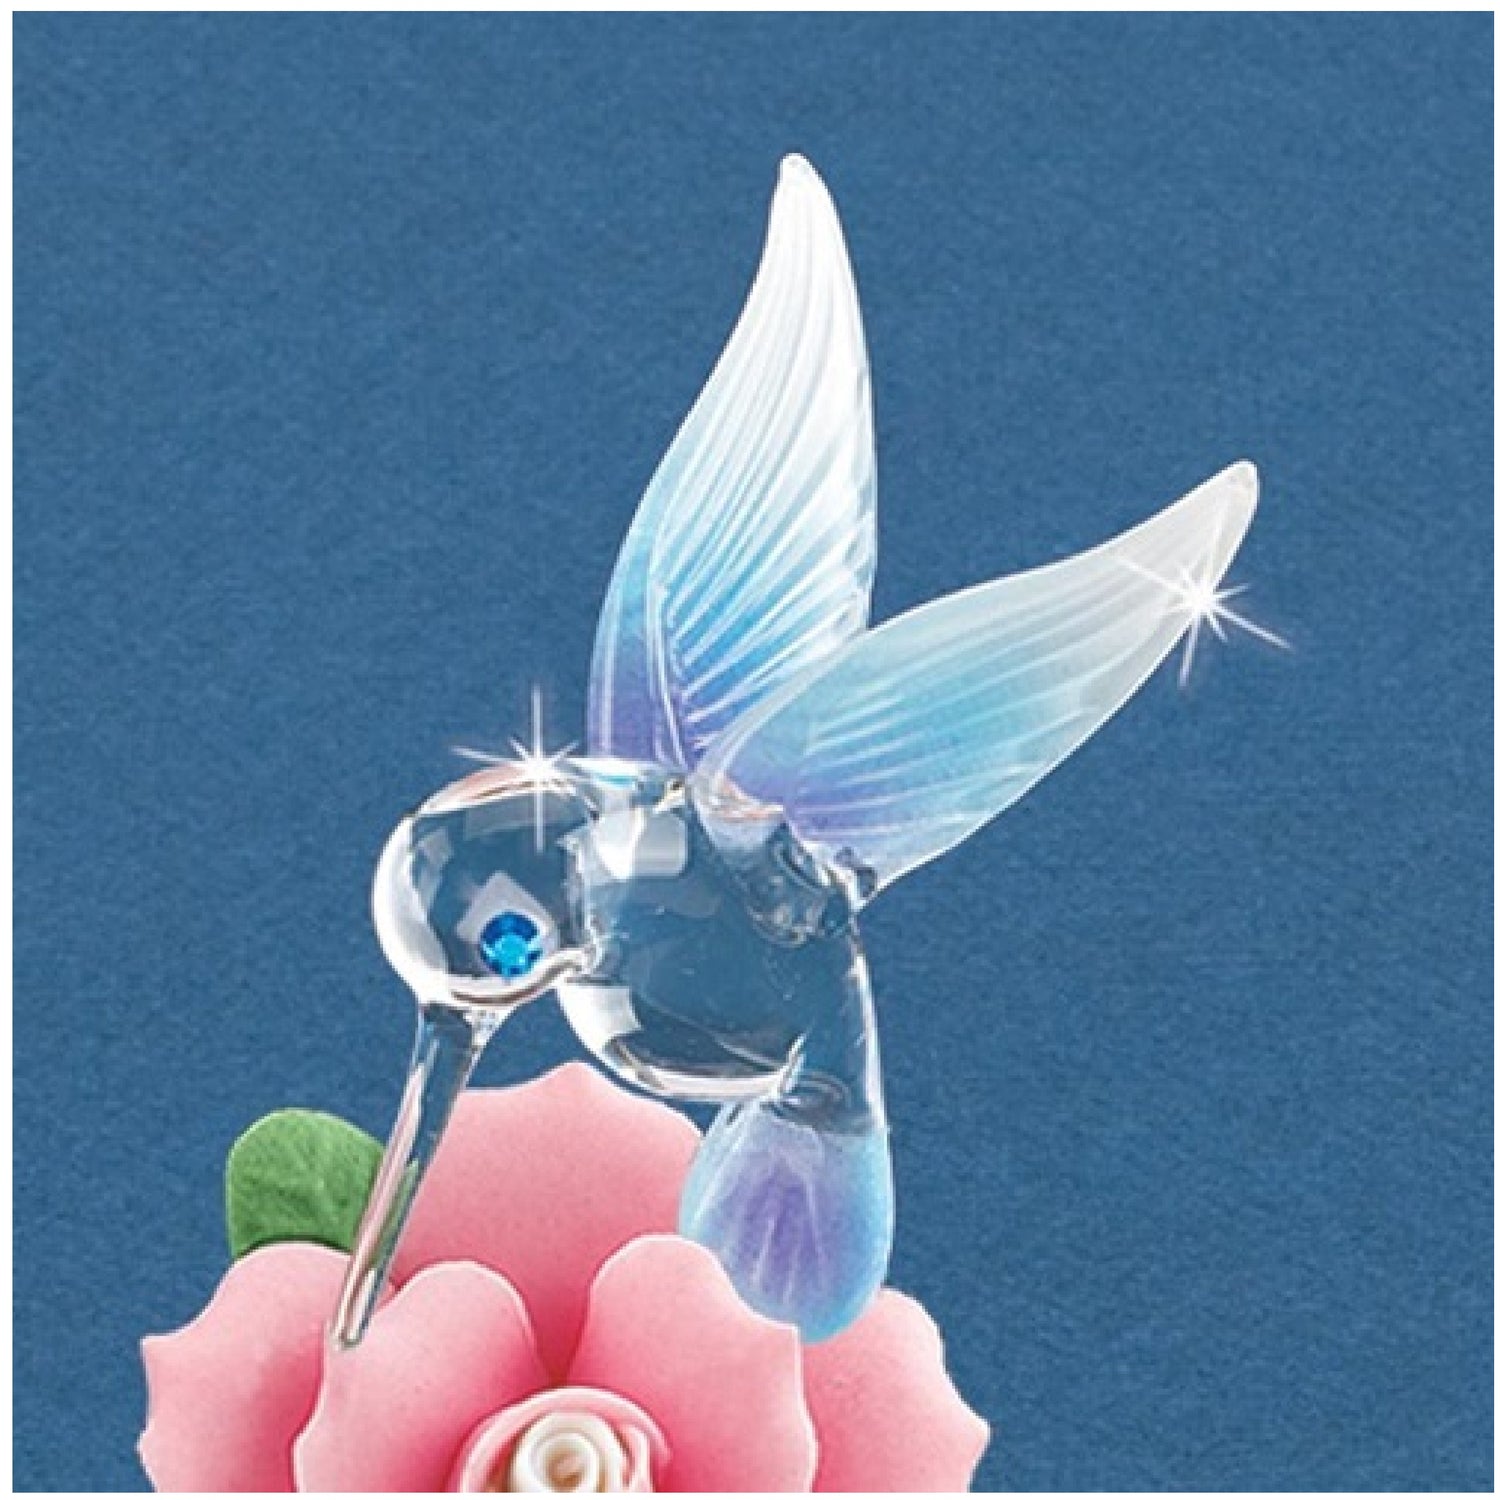 Glass Baron Hummingbird, "I Love You Mom" Figurine